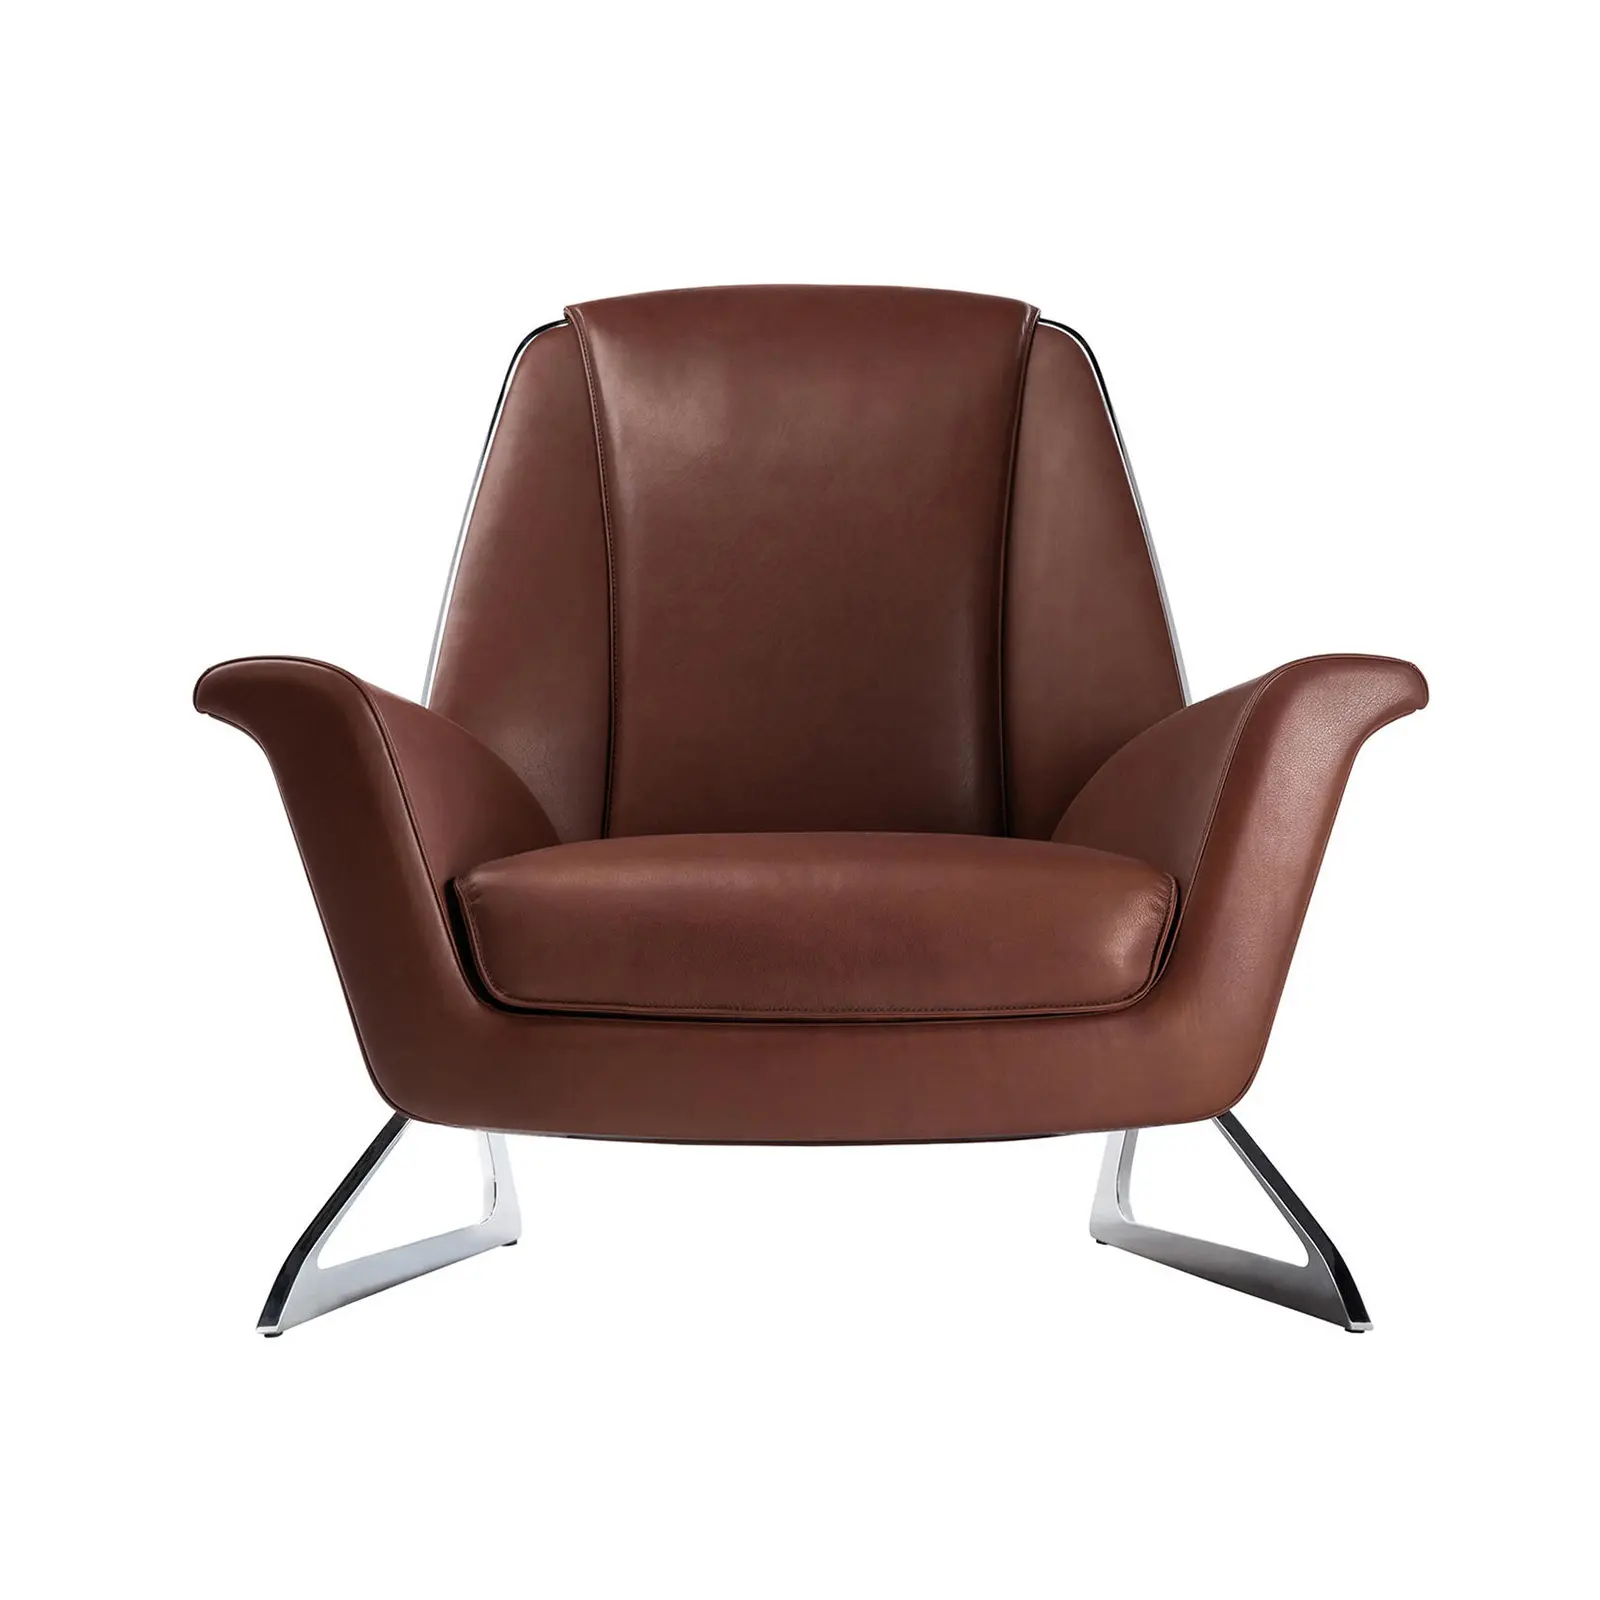 Moderna poltrona reclinabile in vera pelle Relax Chair soggiorno Lounge Chair Lazy Chaire